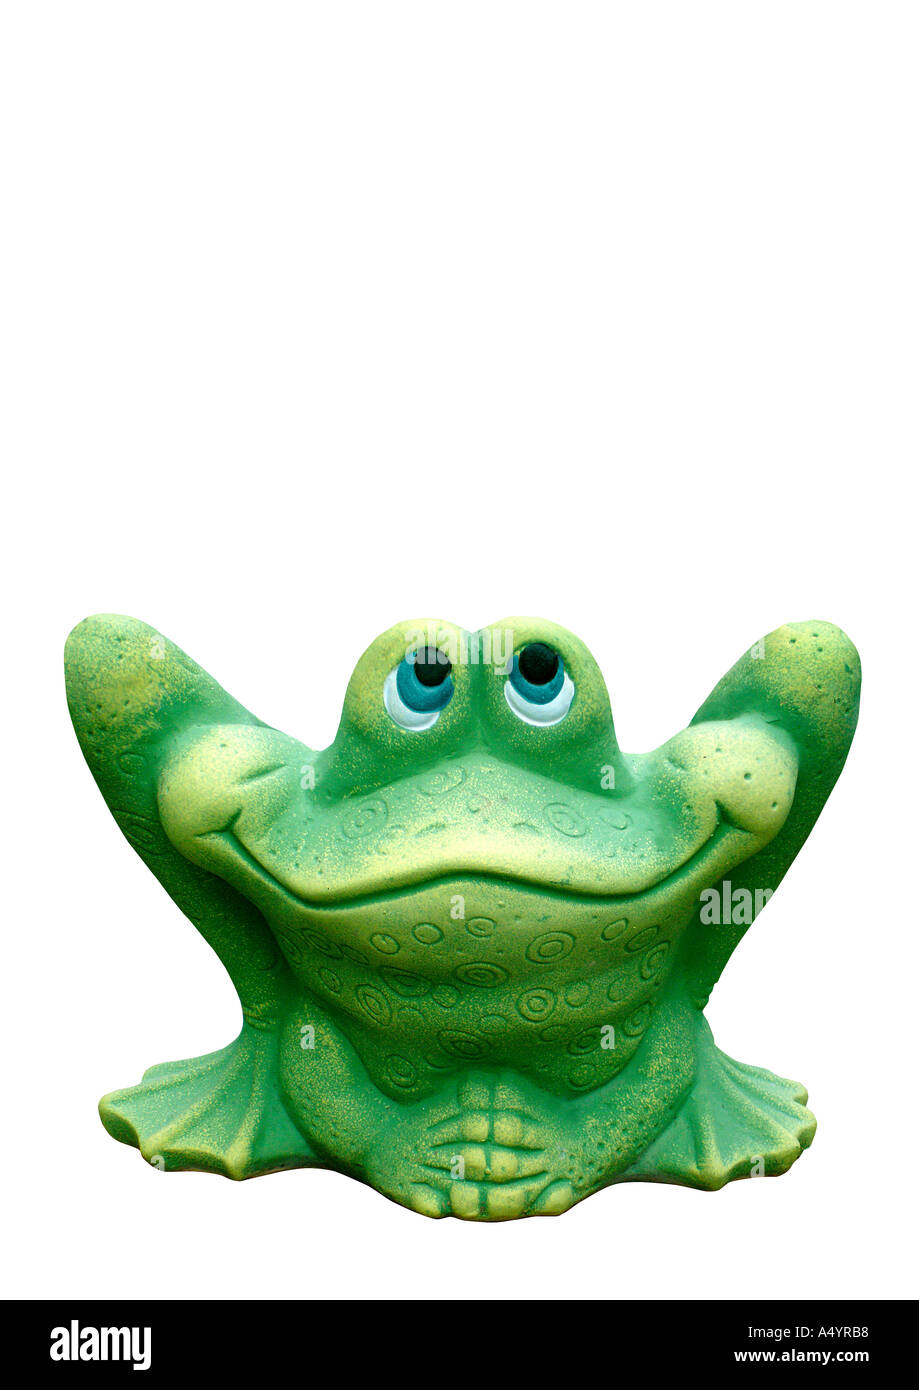 Tonfigur argile grenouille Frosch für den Garten Banque D'Images